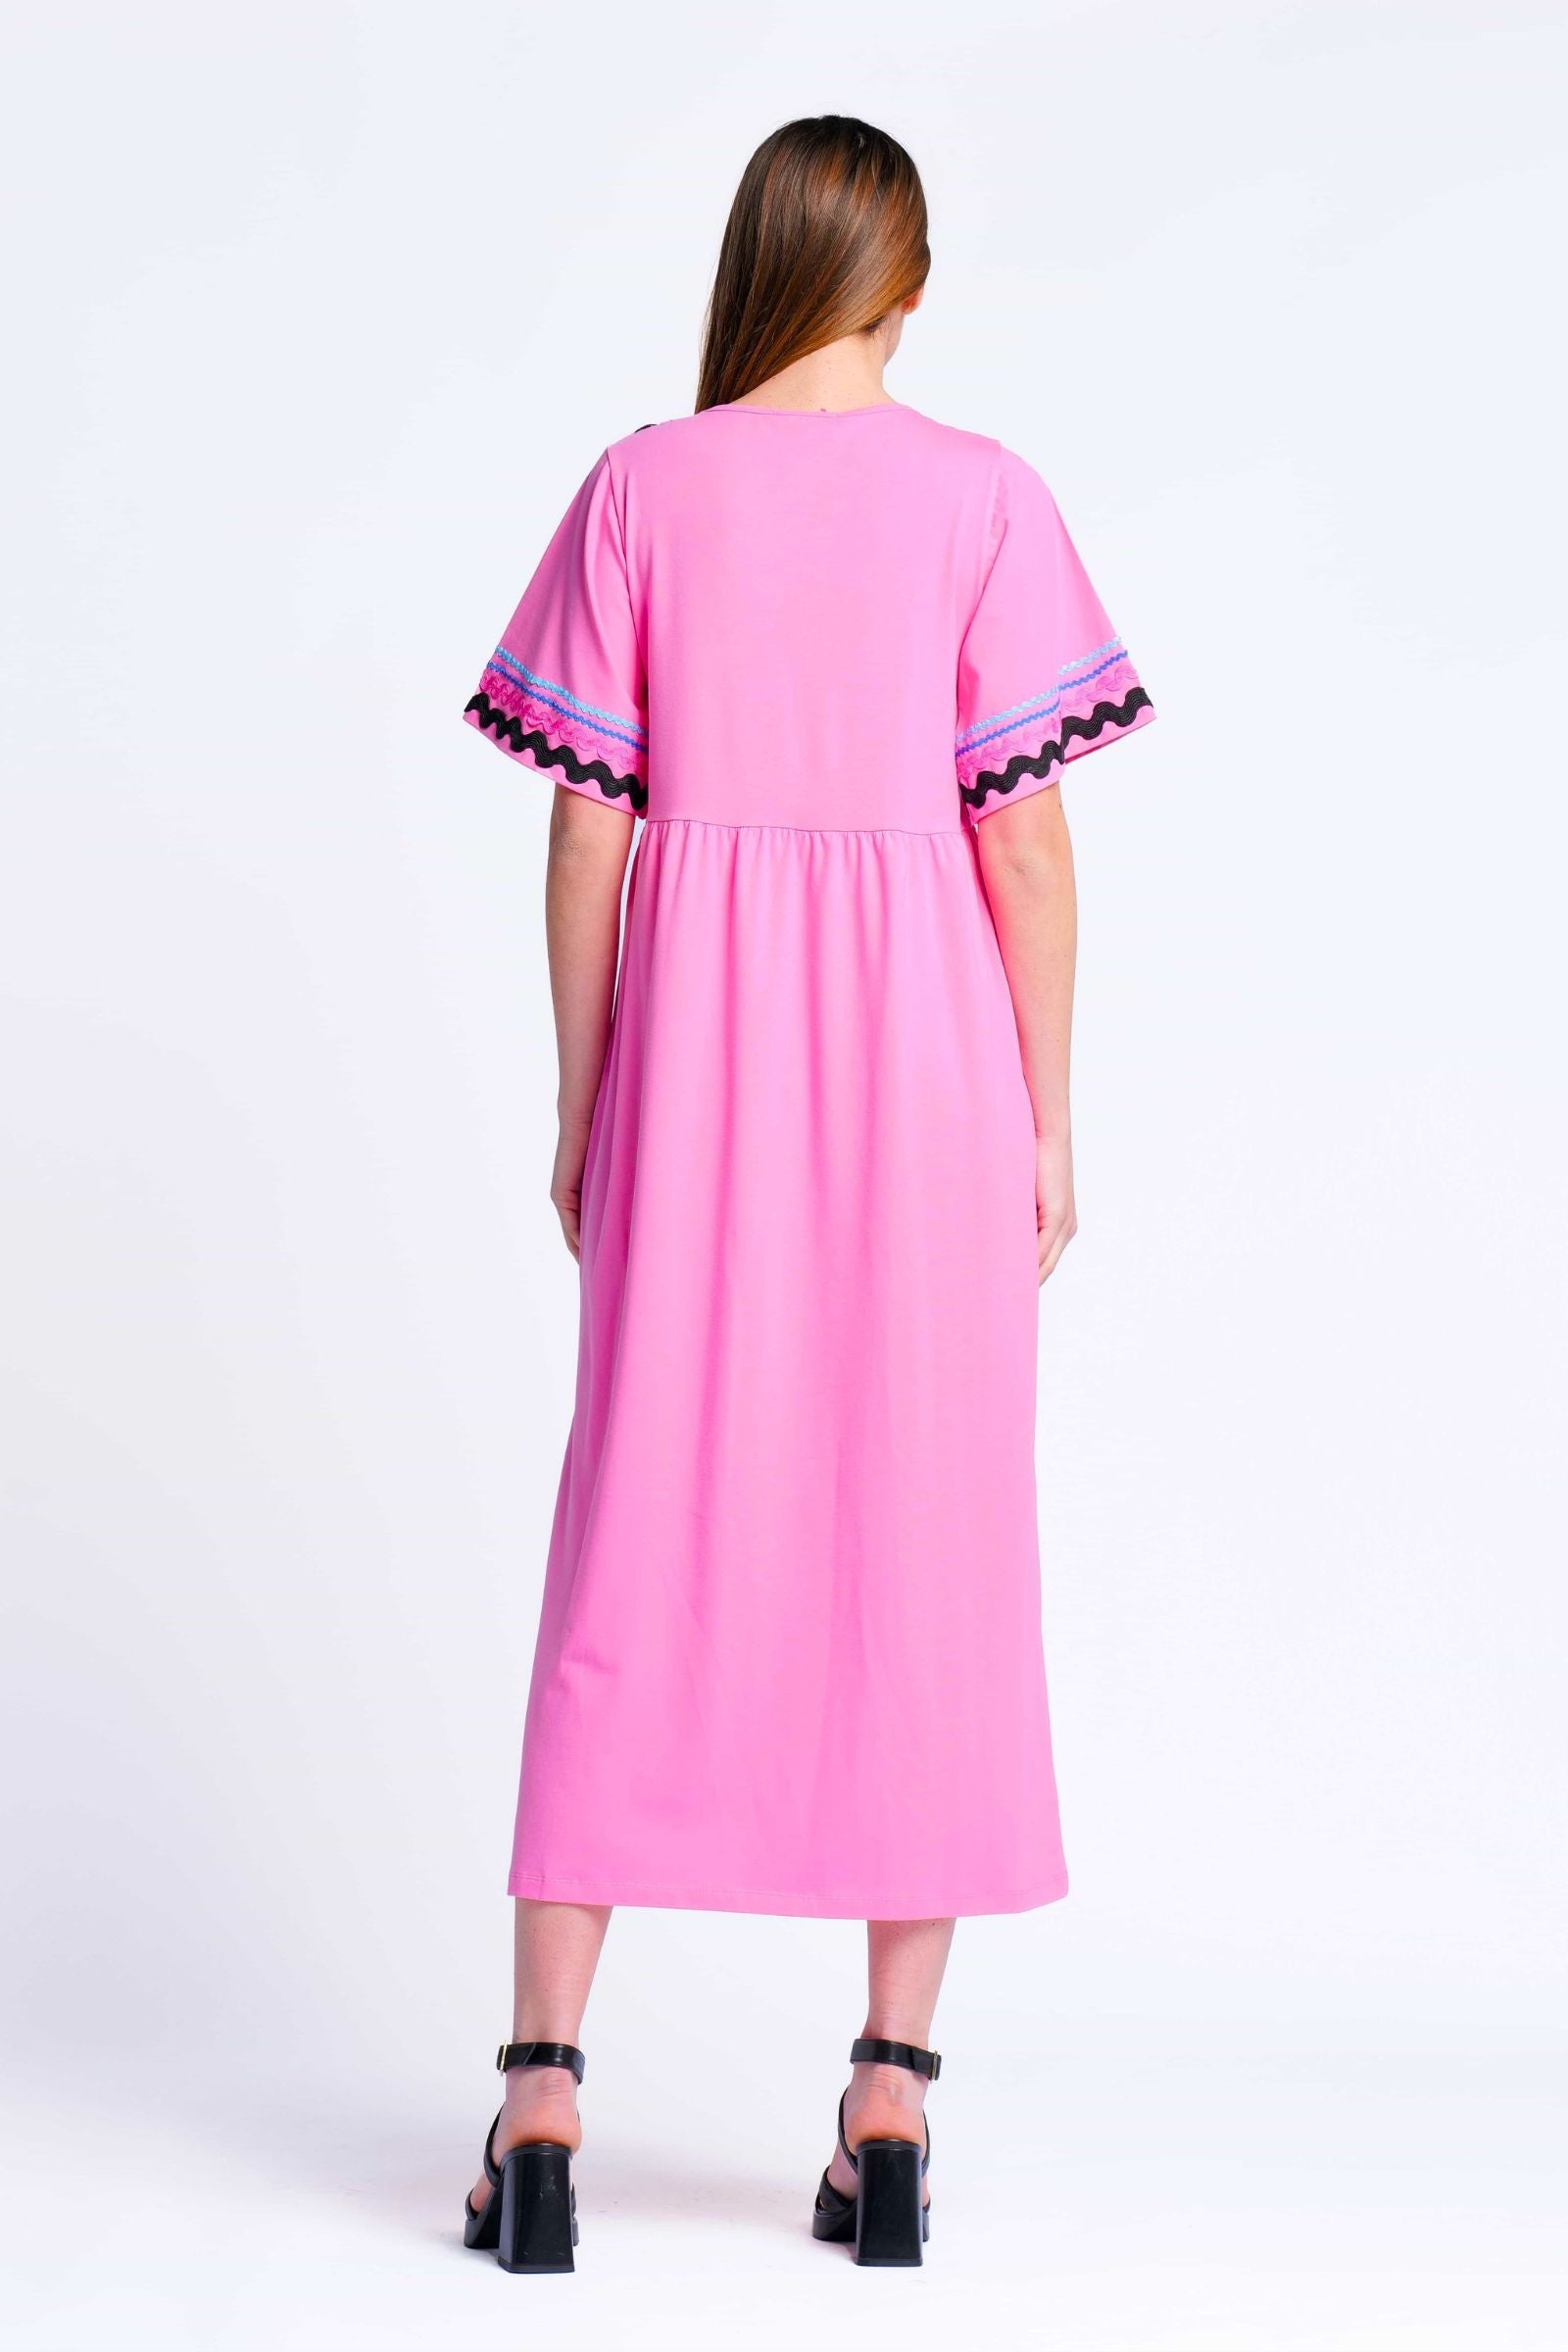 Vestido rosa algodon largo con picunela Lolitas&L - lolitasyl.com